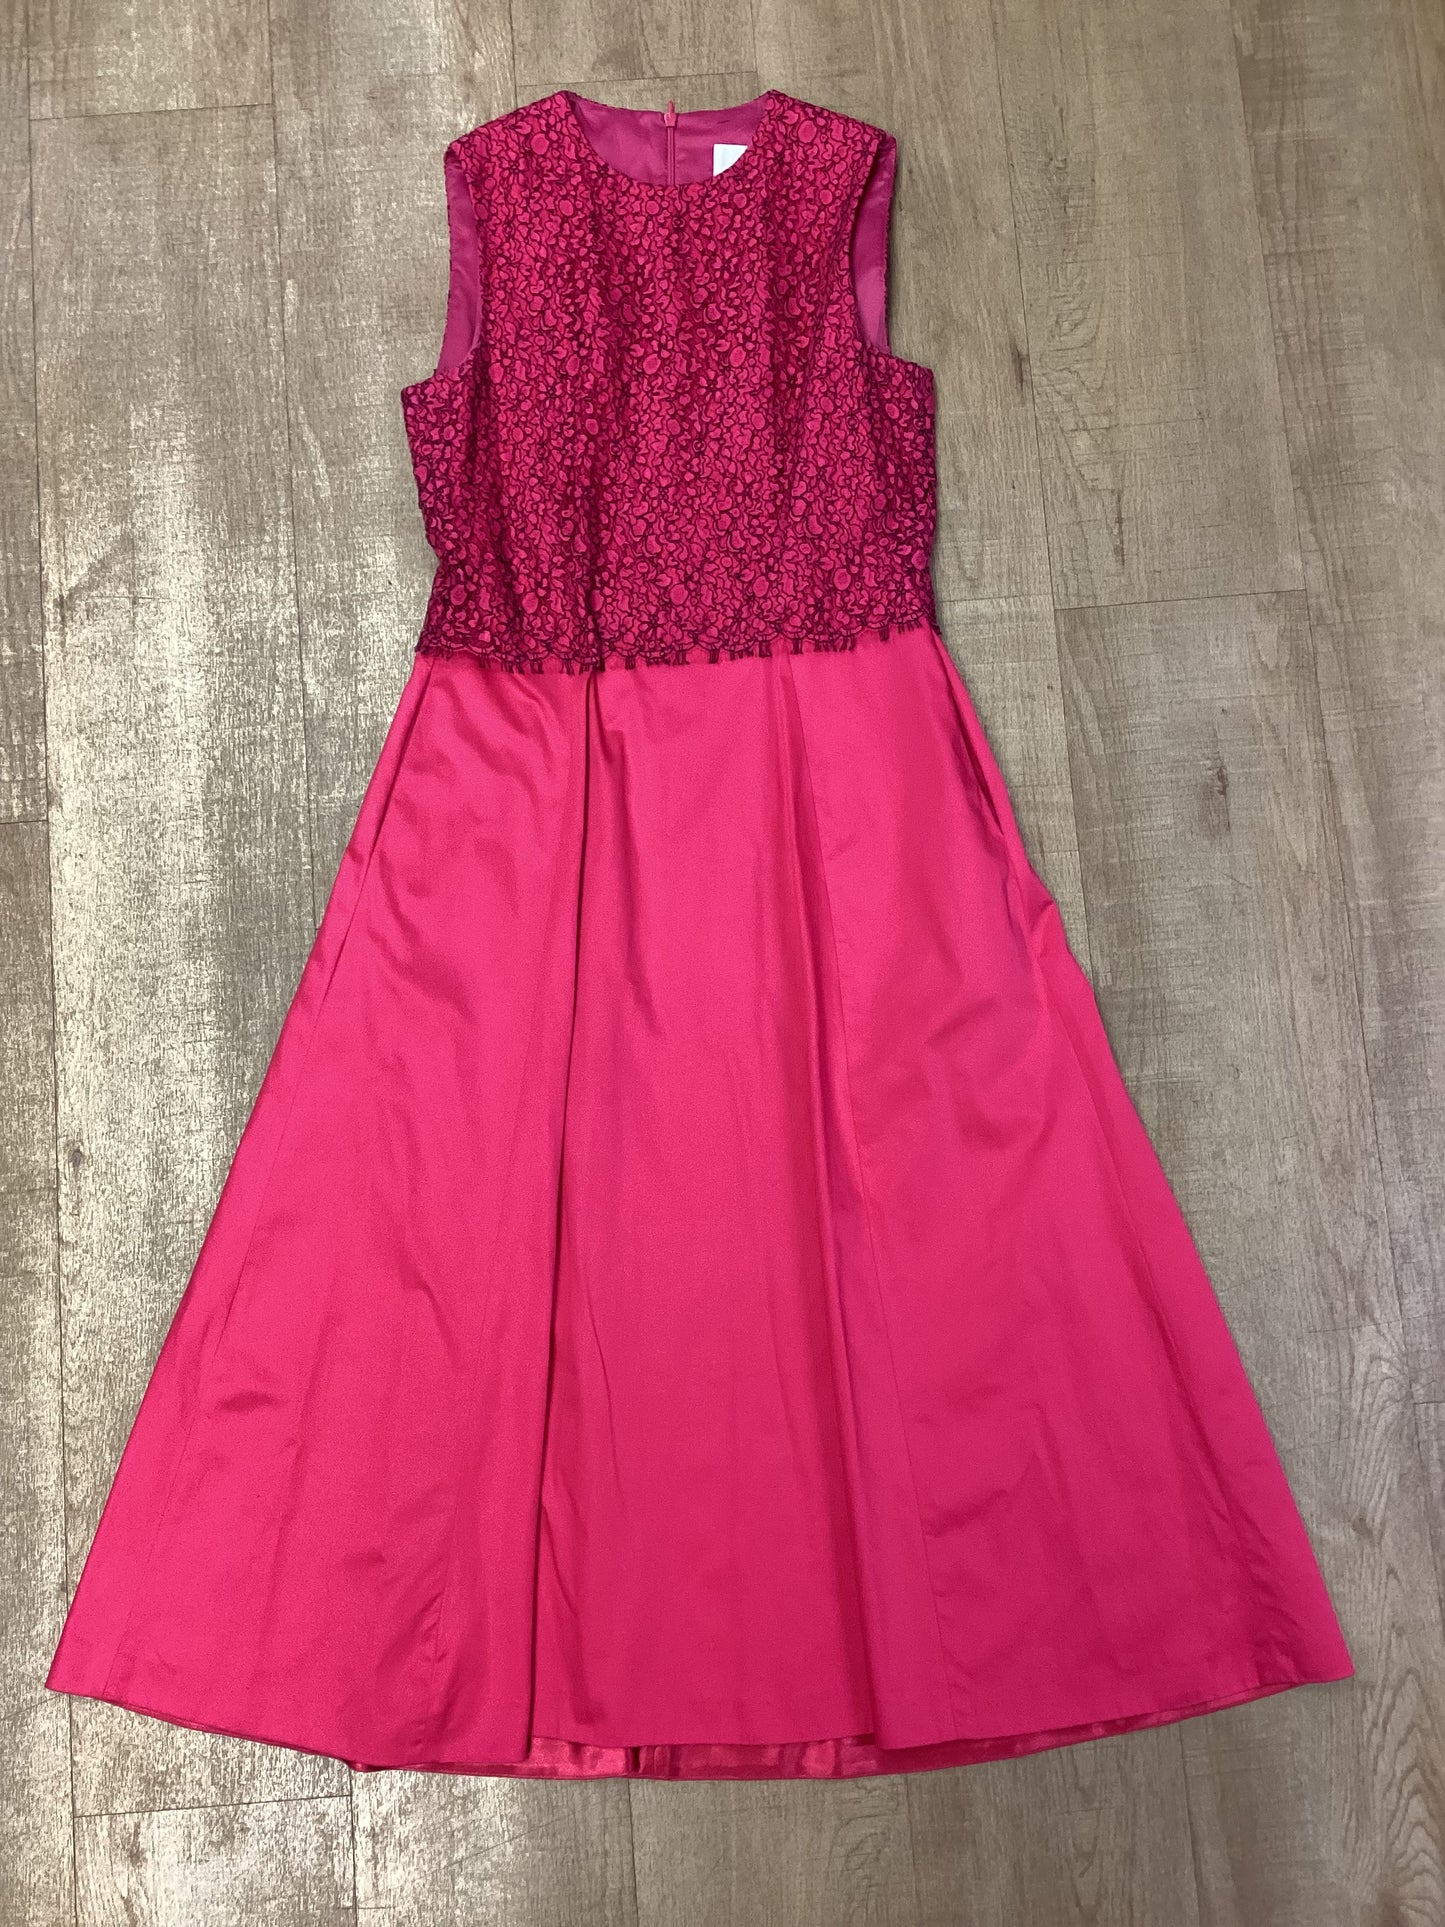 L.K. Bennett Pink Lace Detail Dress Size 12